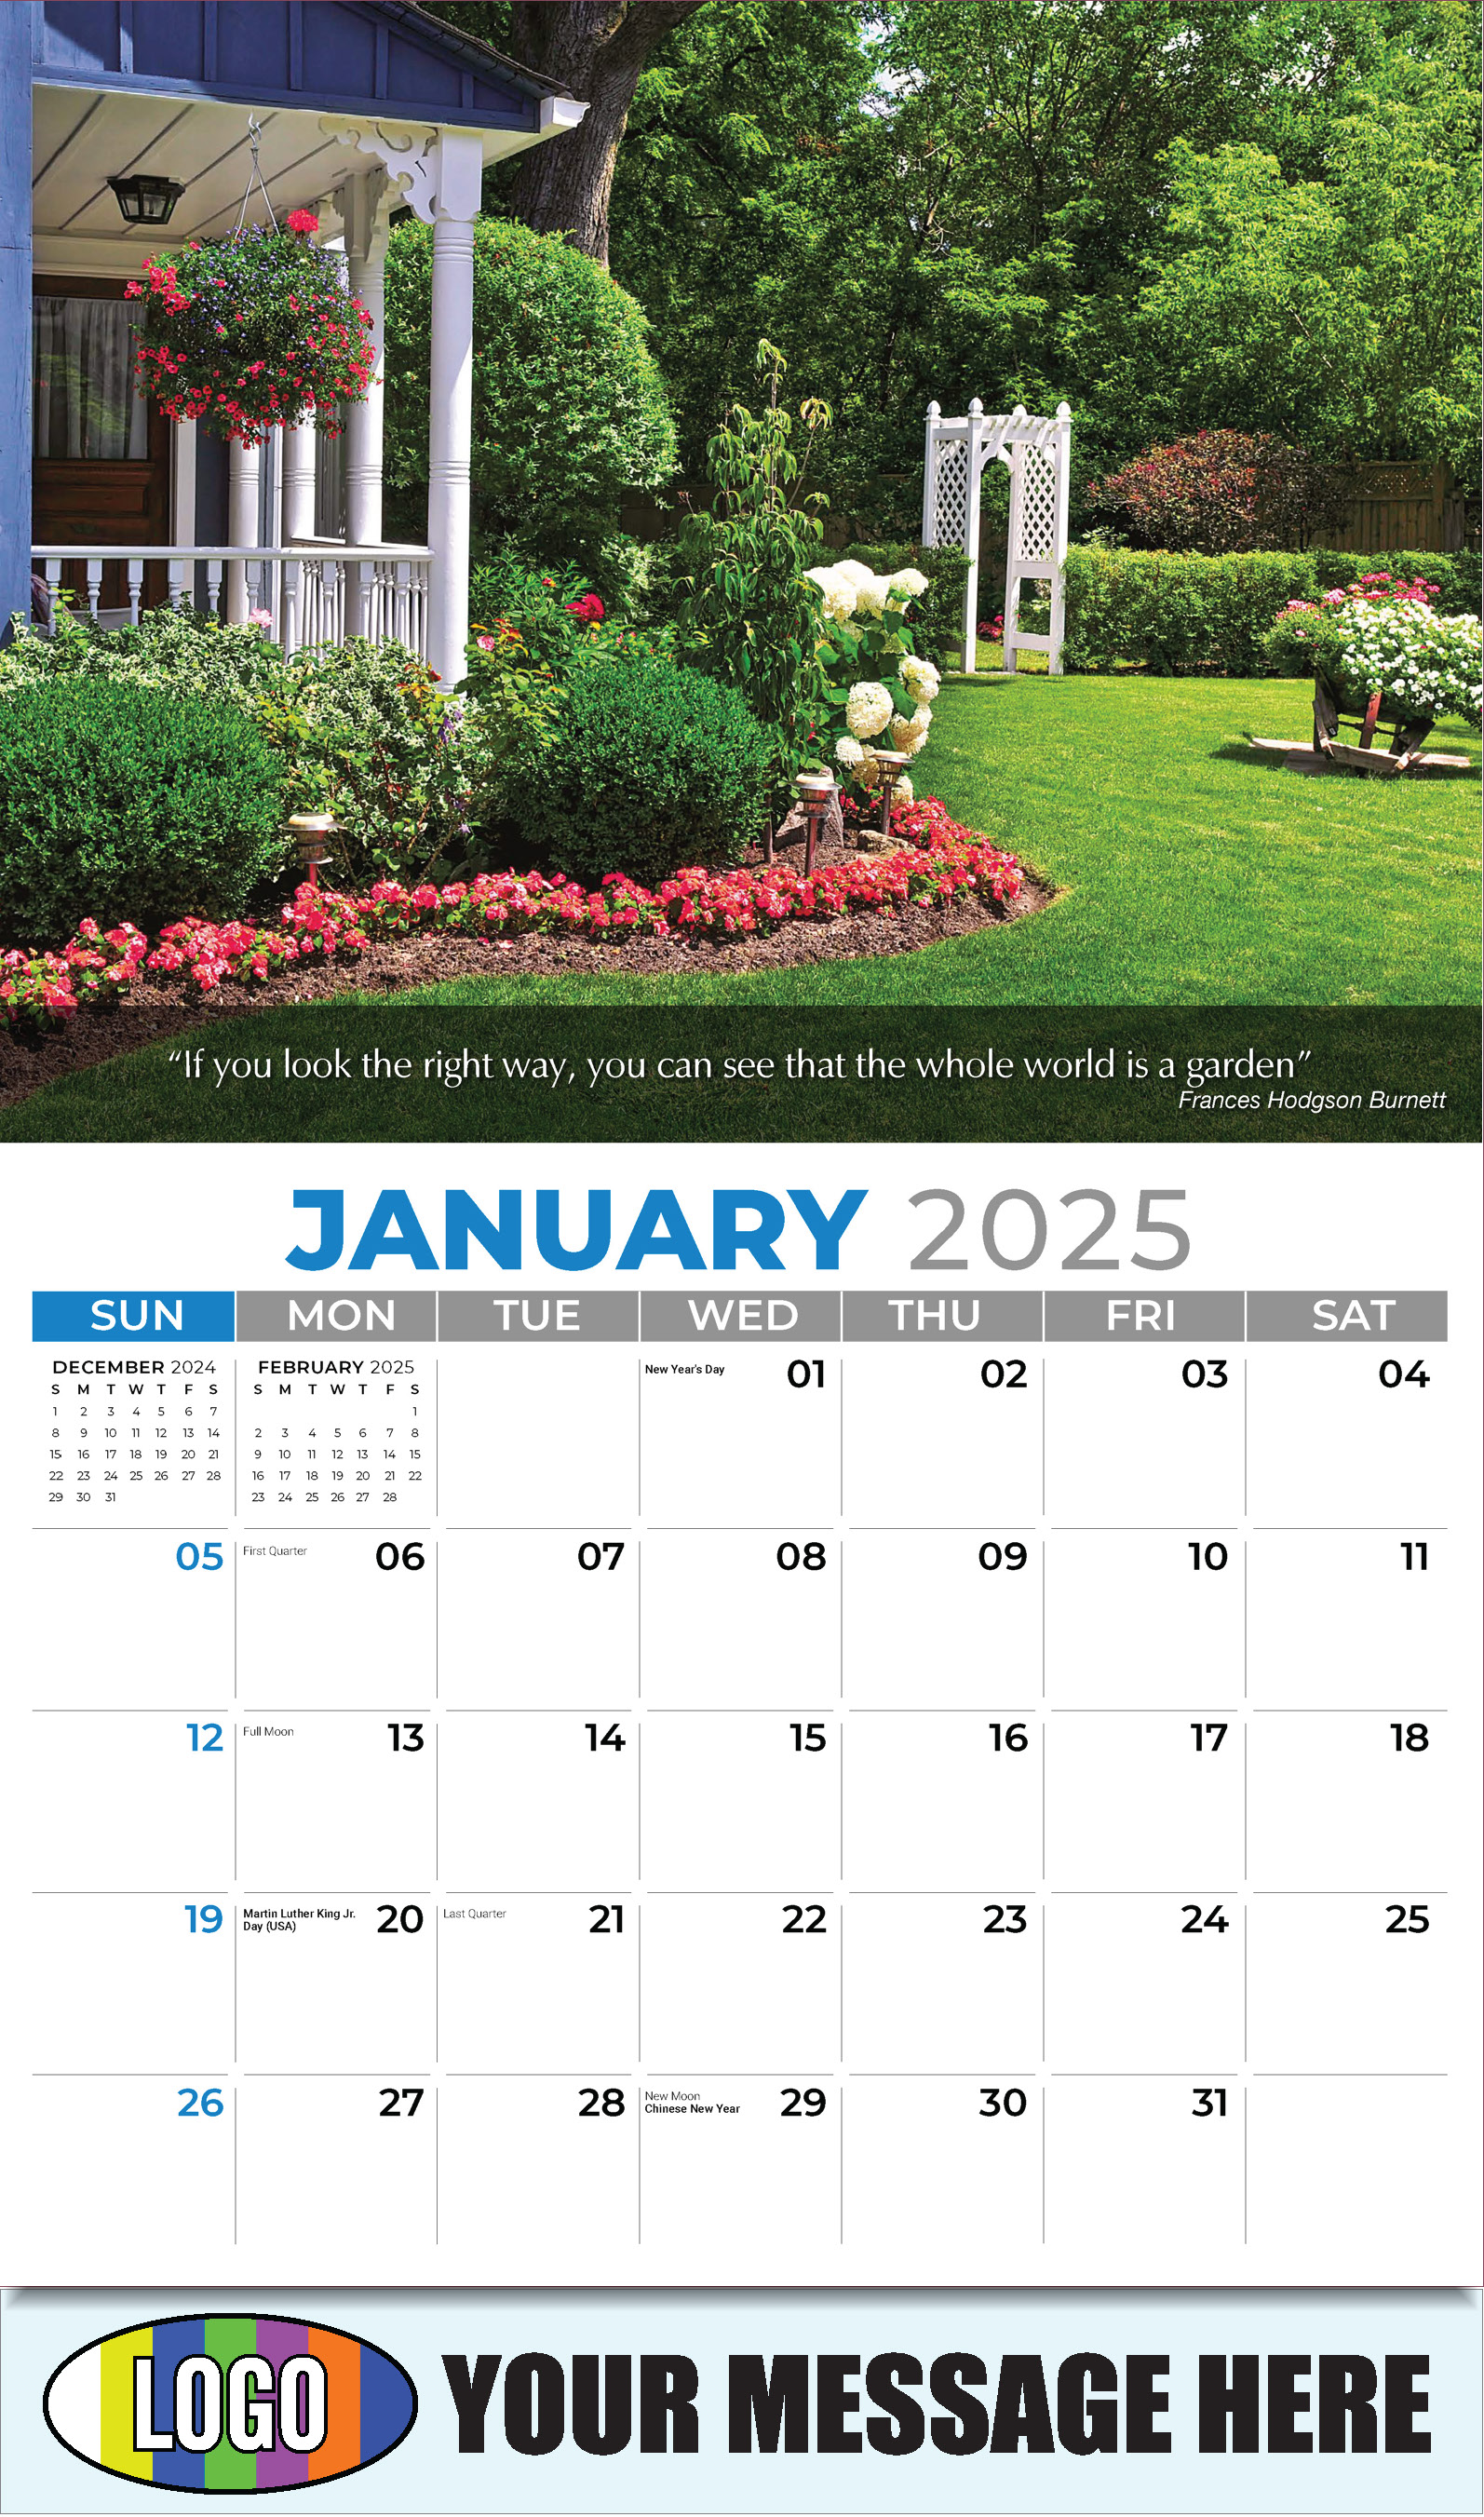 Flowers and Gardens 2025 Business Advertising Calendar - January